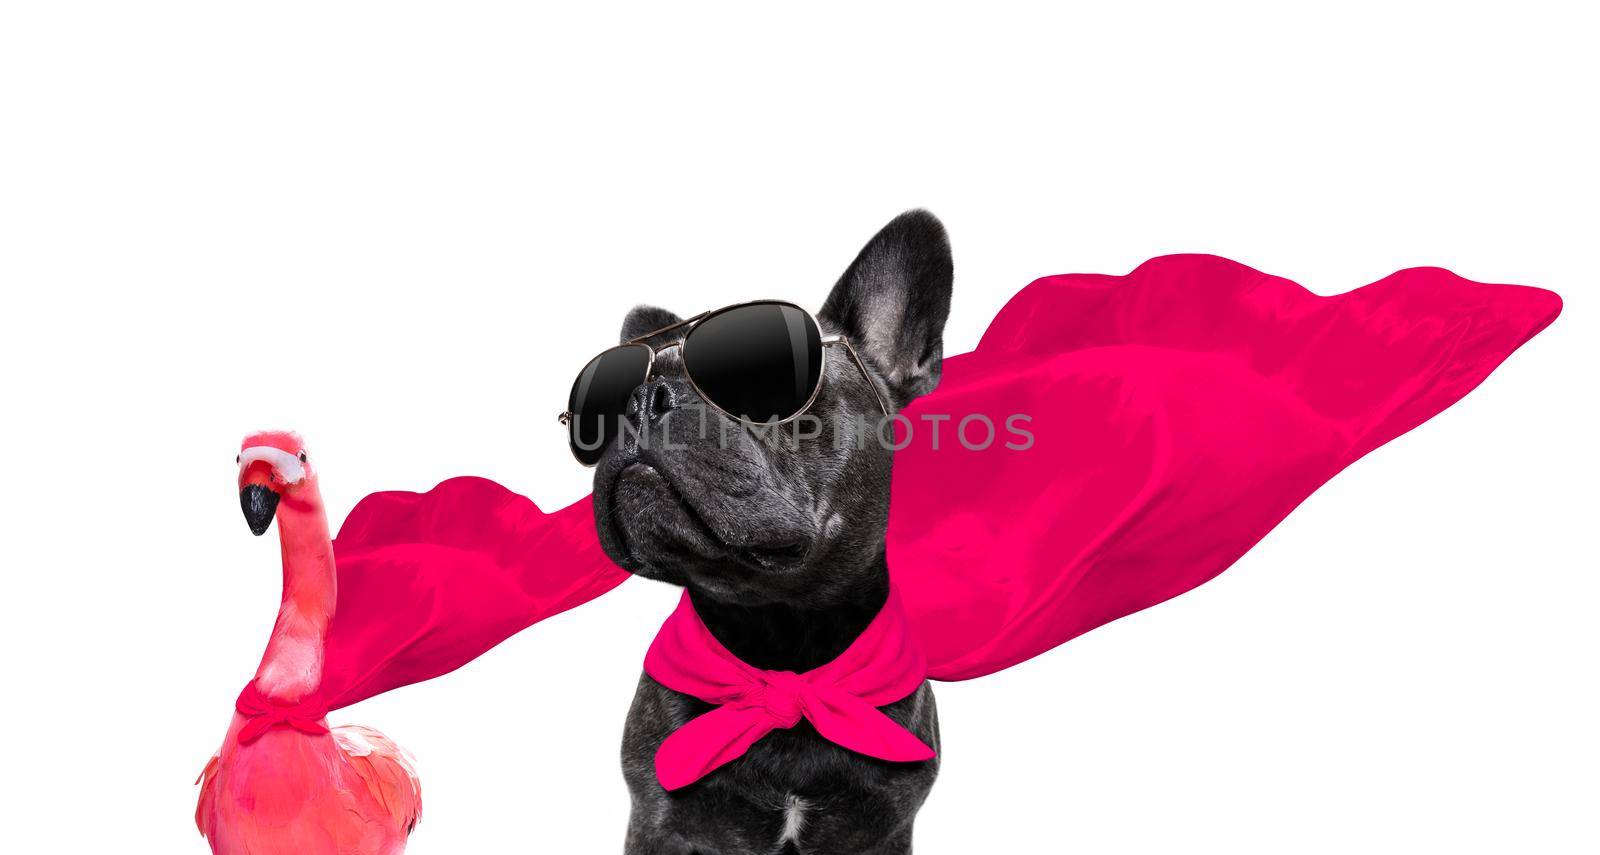 super hero dog by Brosch